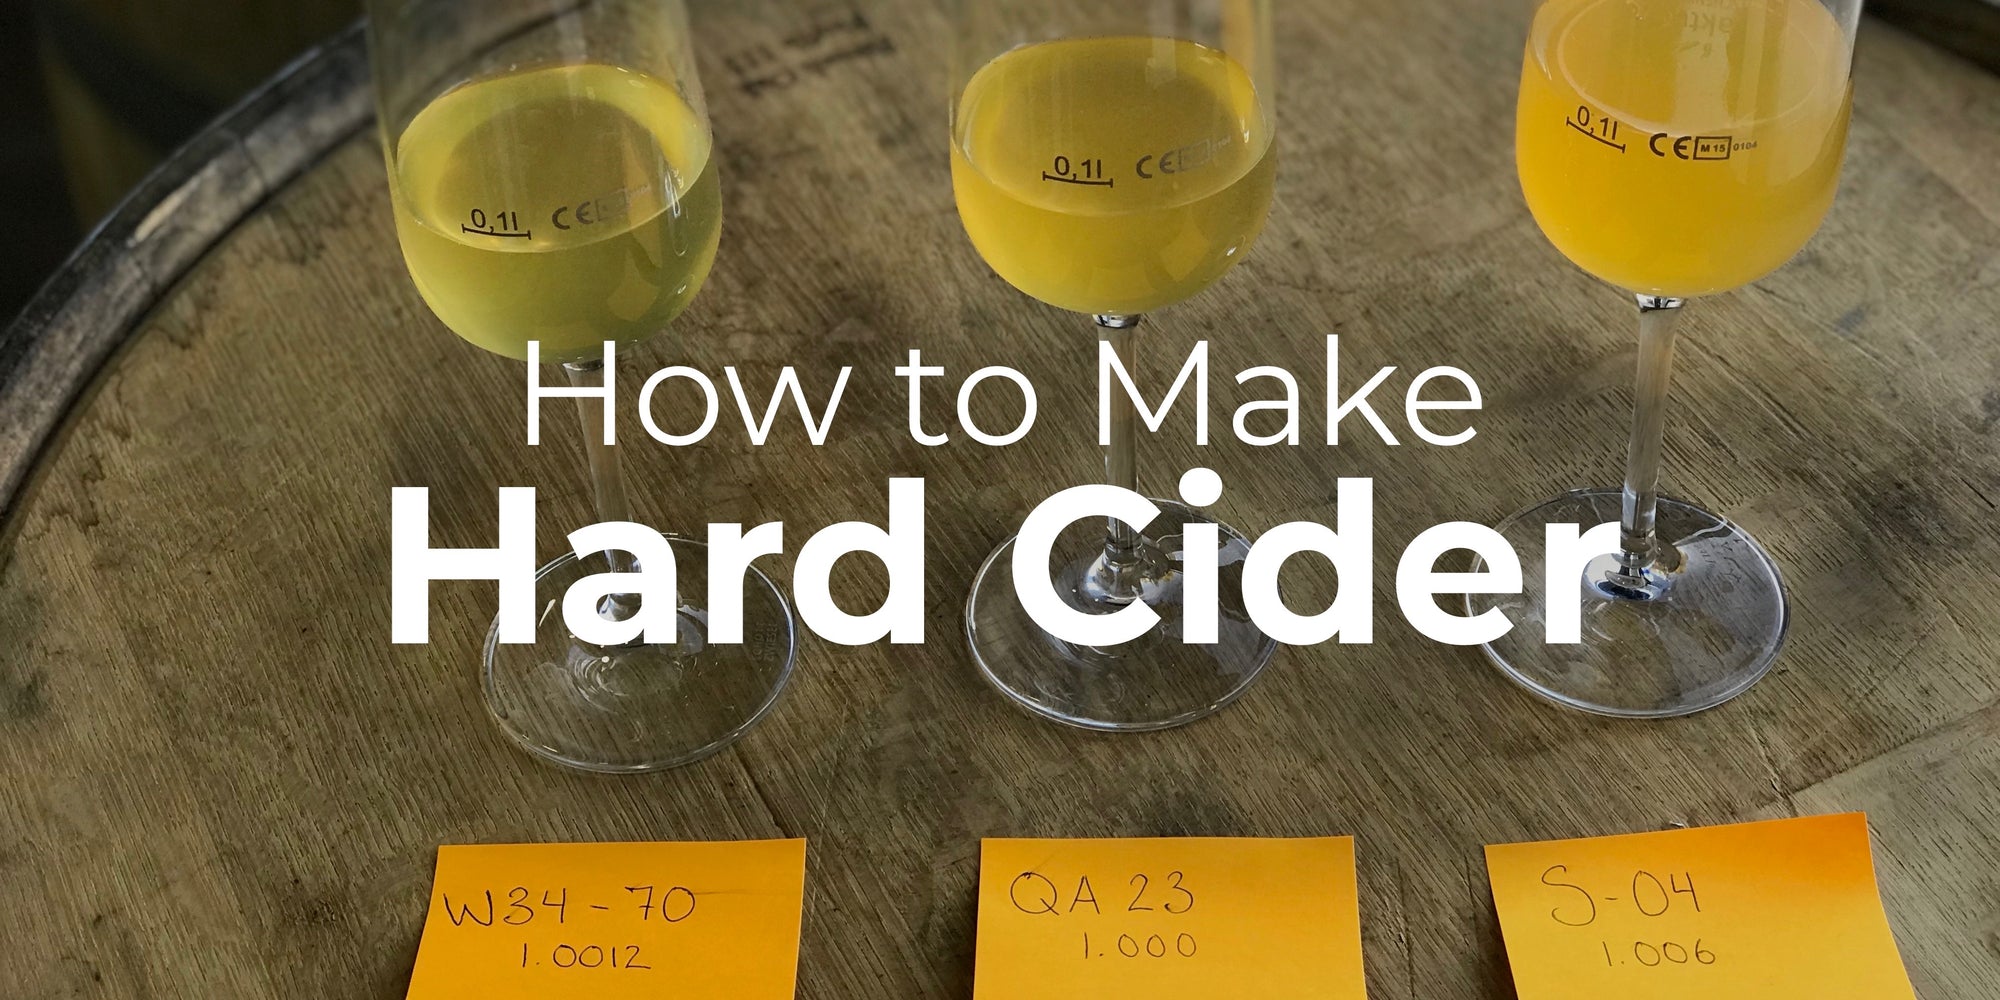 How to Make Cider